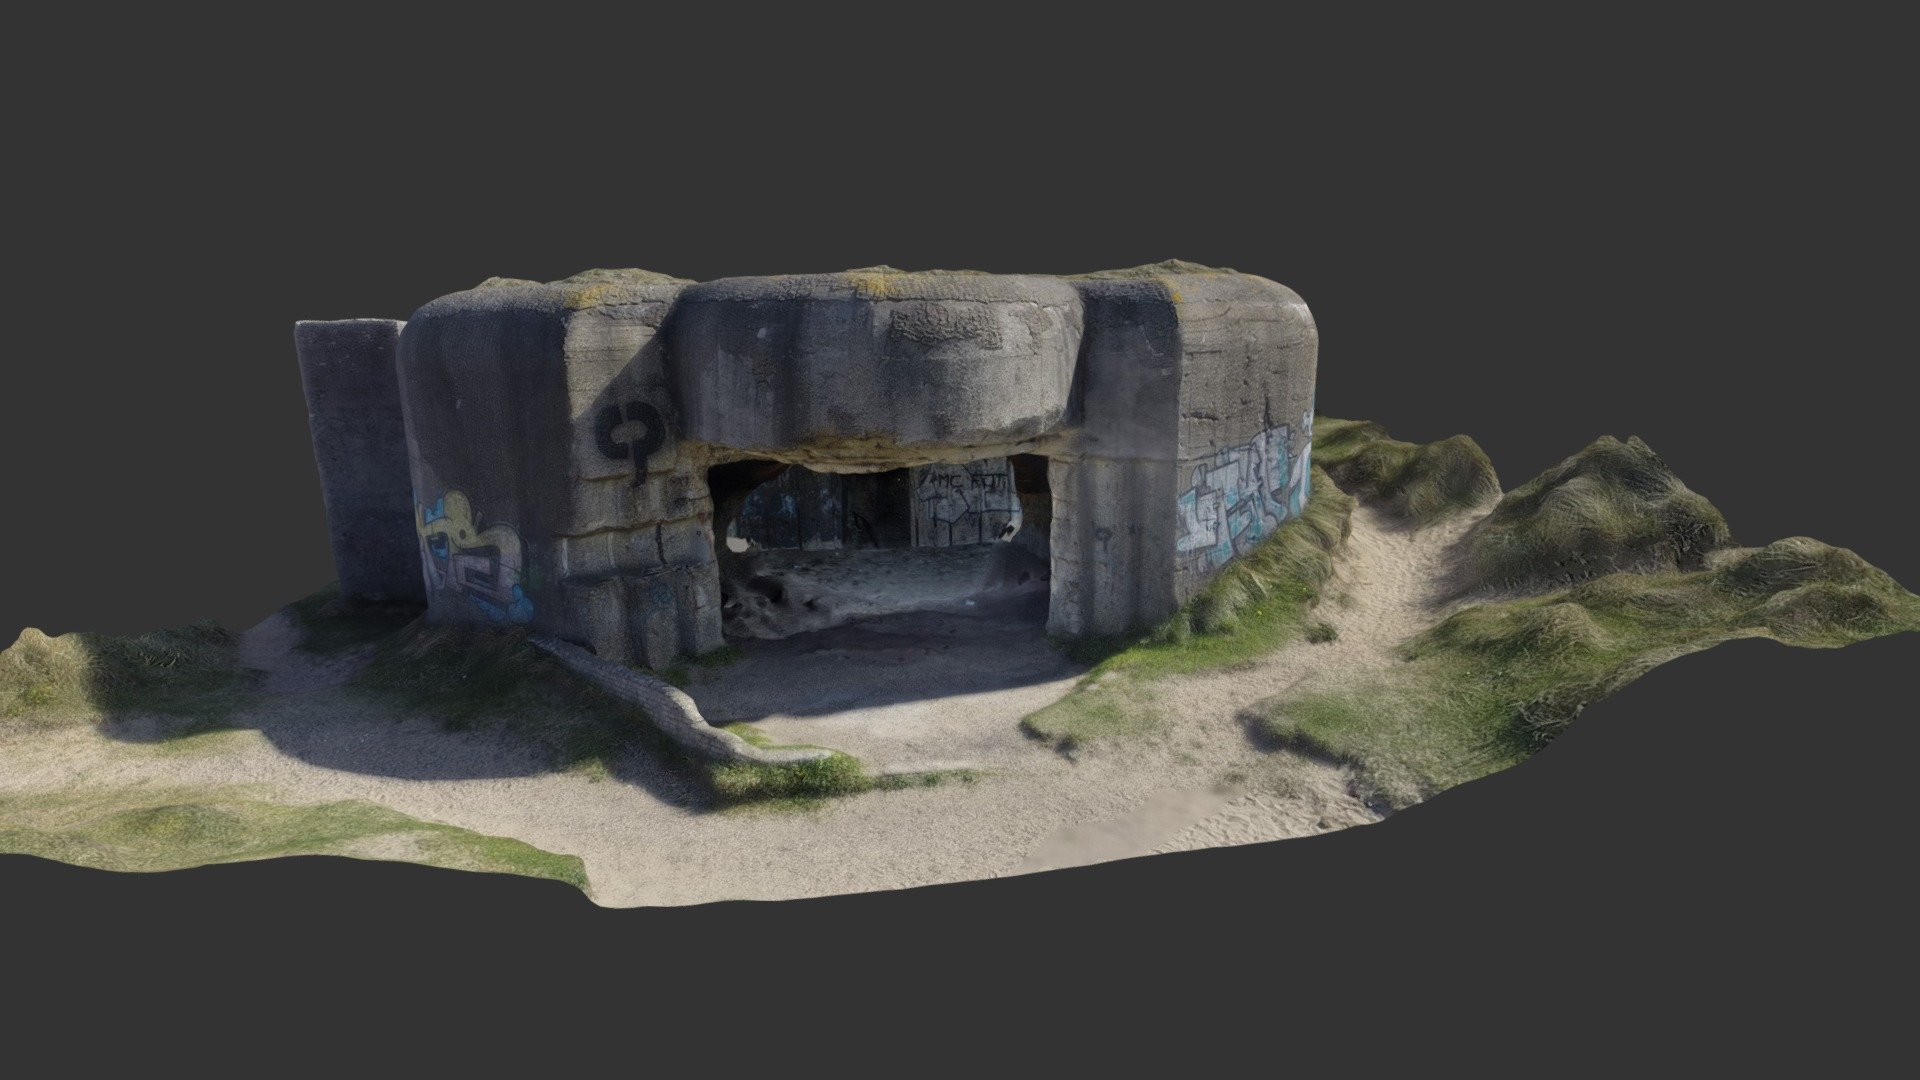 Bunker IJmuiden Beach
Pictures taken with Drone DJI Phantom 2 met Gopro 3+ - Festung IJmuiden Nederland, Atlantikwall - 3D model by Maarten Tje (@dagrover) 3d model